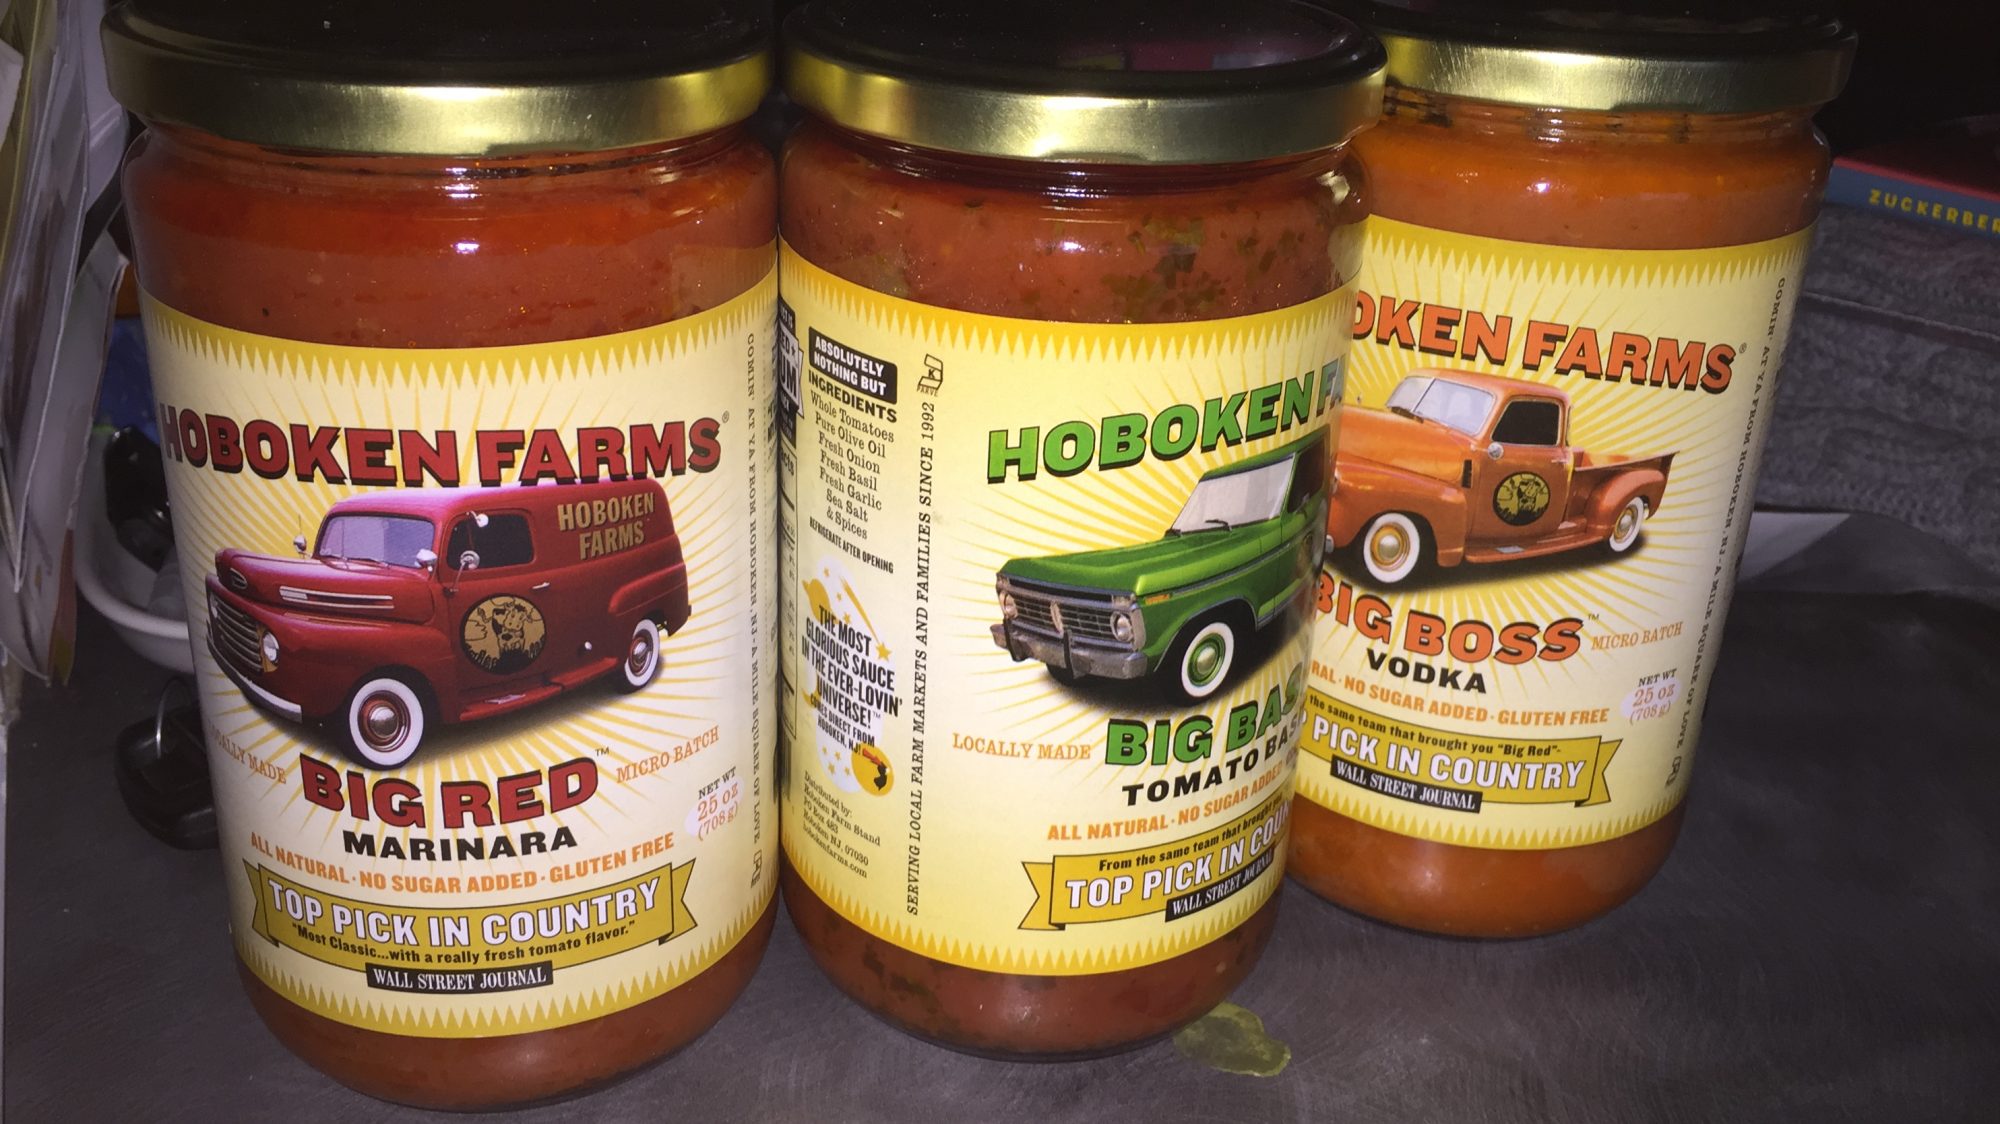 Hoboken Farms: BIG RED Marinara, BIG BASIL Tomato sauce, and BIG BOSS Vodka sauce